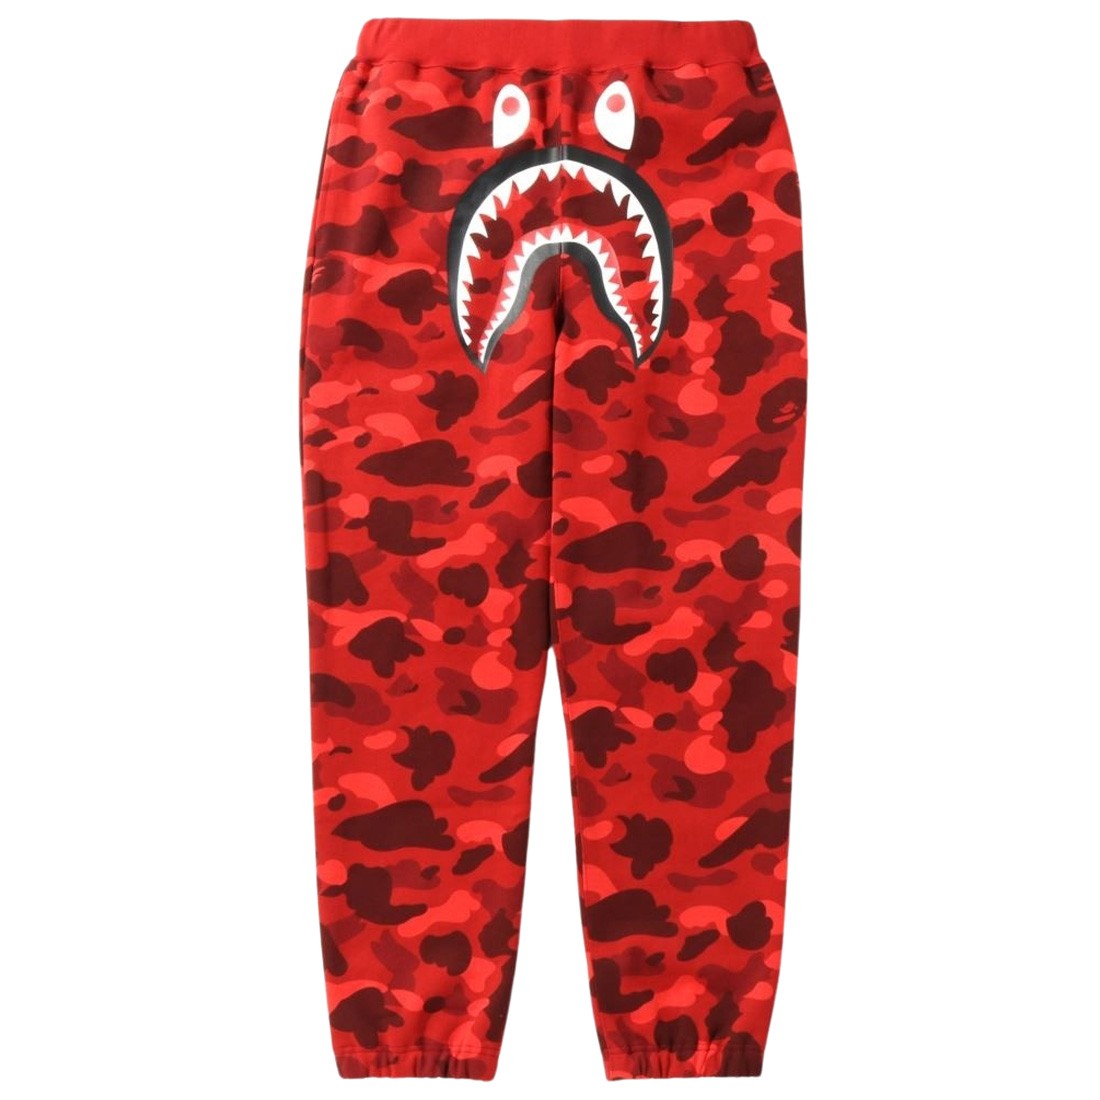 BAPE Color Camo Shark Day Pack - Red, A Bathing Ape